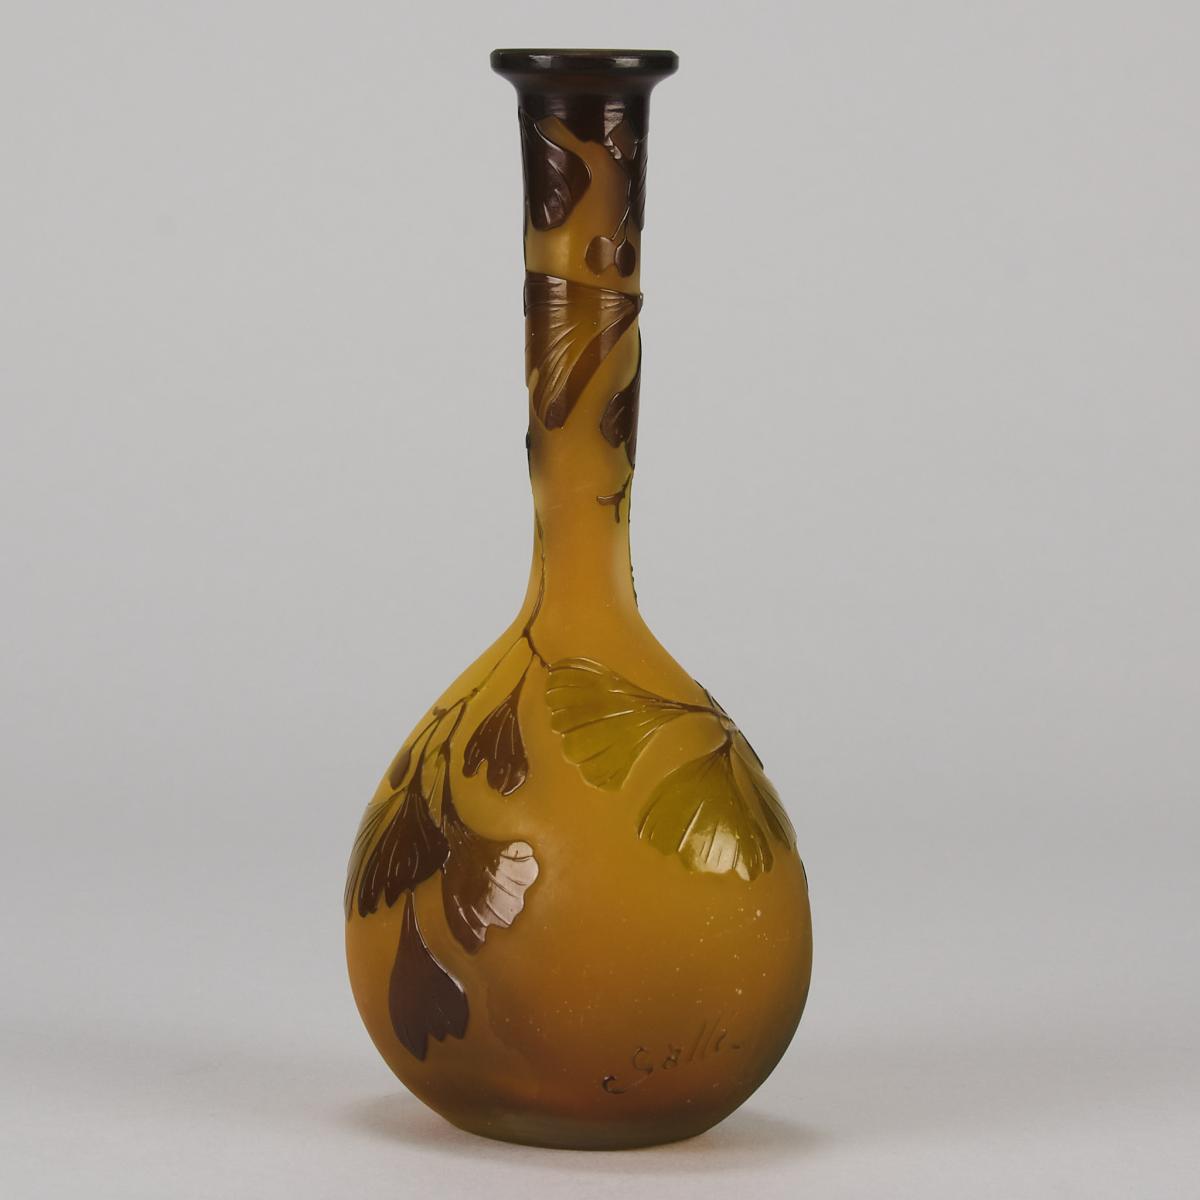 Early 20th Century Art Nouveau Vase entitled "Floral Banjo Vase" by Emile Galle